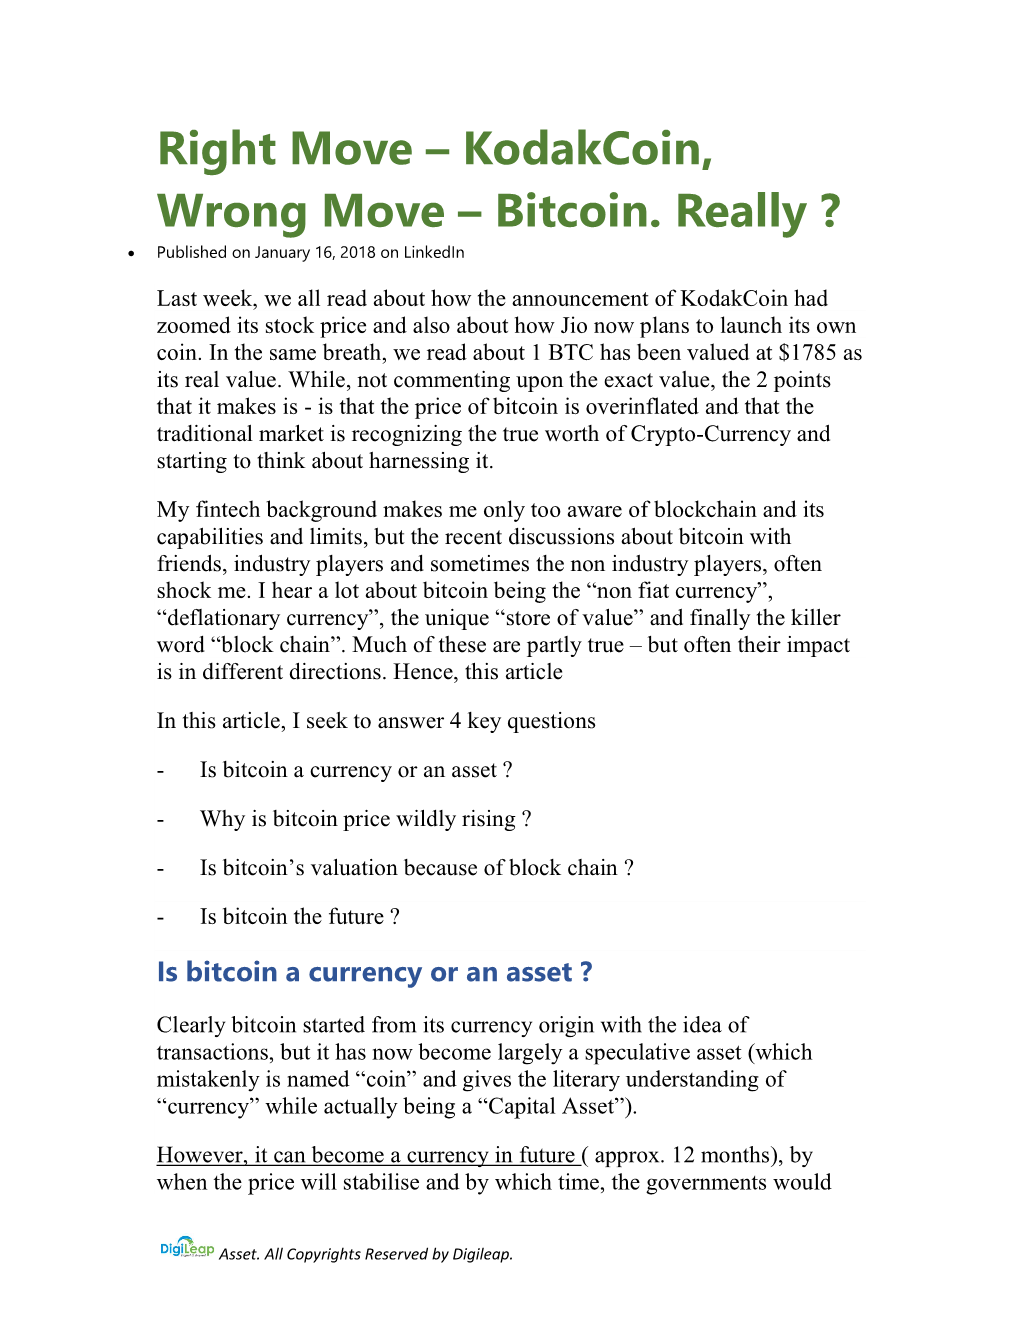 Right Move – Kodakcoin, Wrong Move – Bitcoin. Really ?  Published on January 16, 2018 on Linkedin